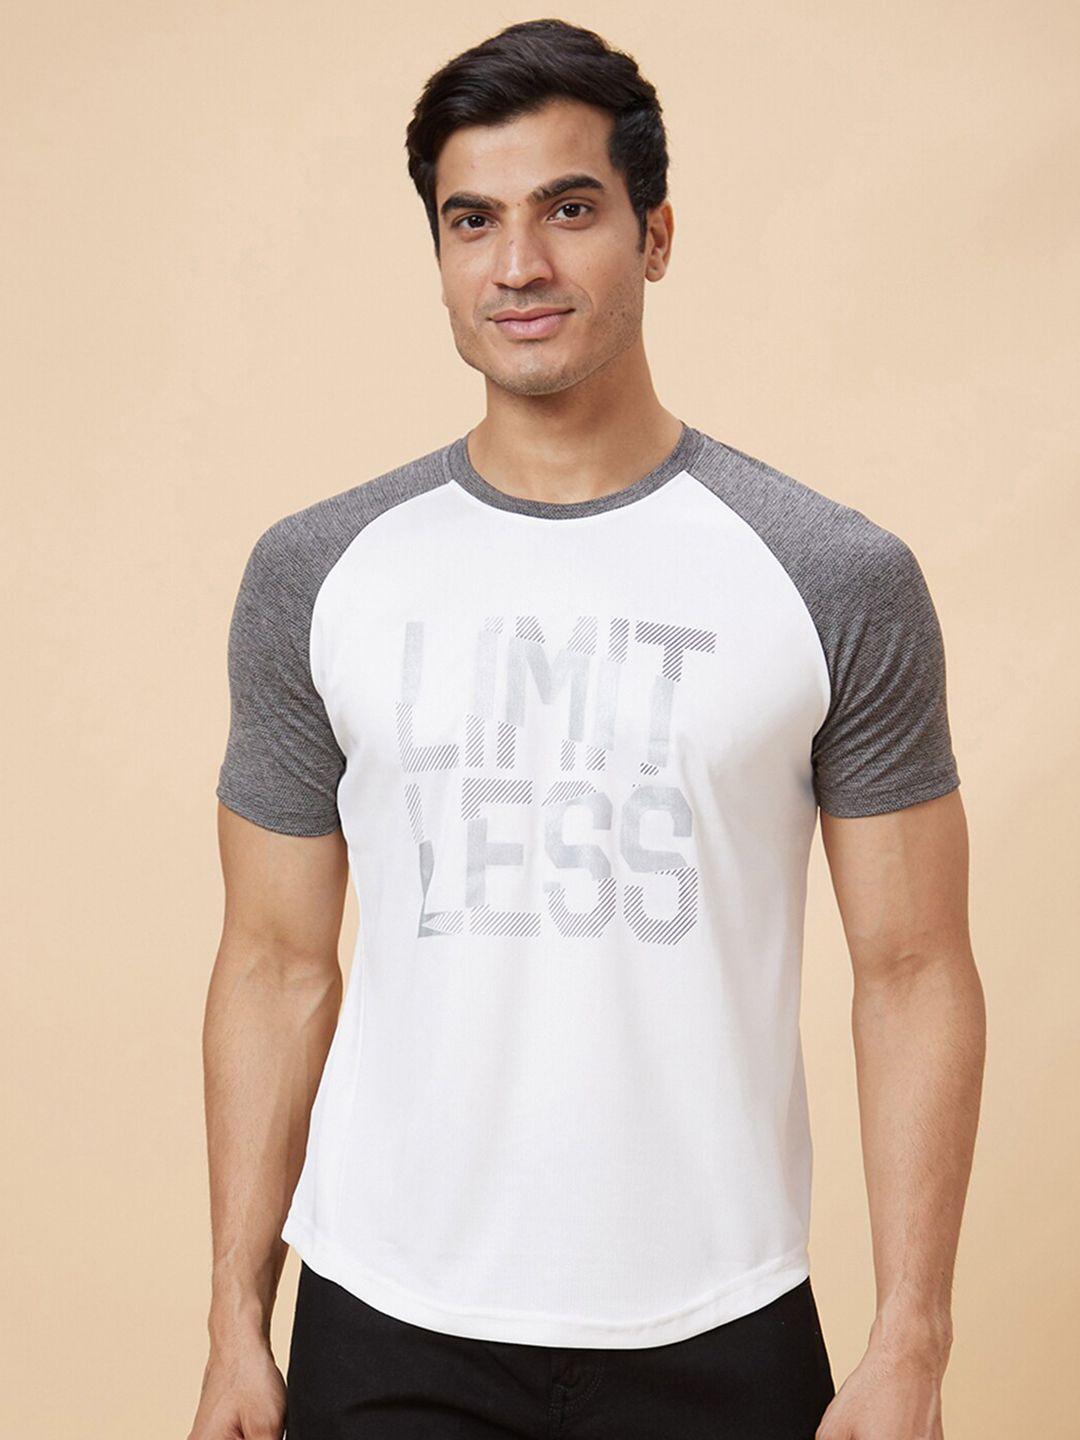 globus white typography printed raglan sleeves casual t-shirt